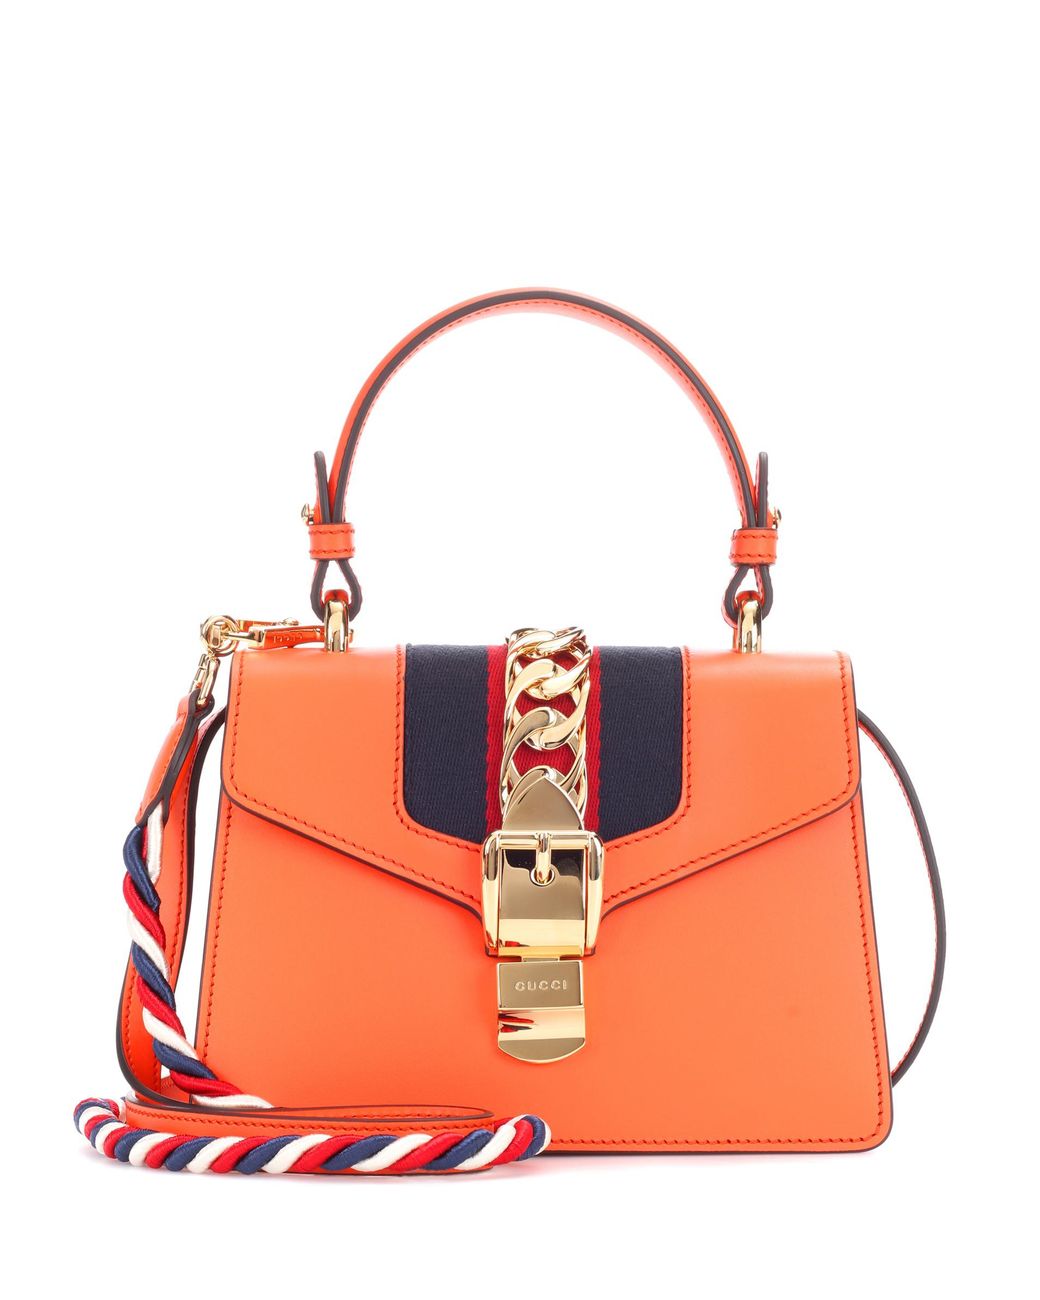 Gucci Sylvie Mini Leather Crossbody Bag in Orange | Lyst